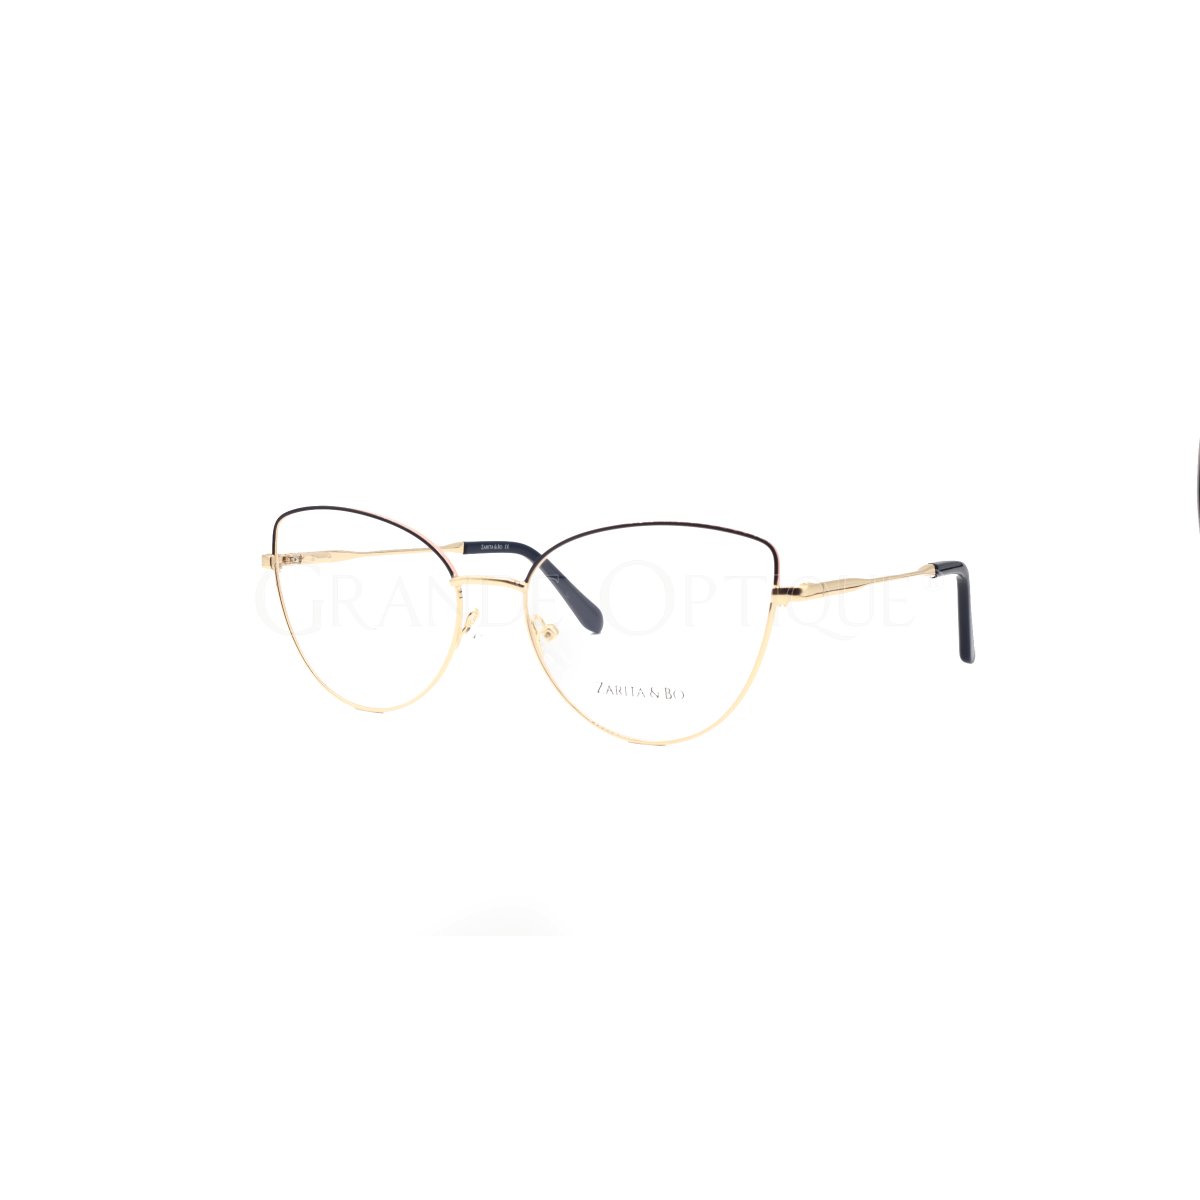 Rame ochelari Zarita 18004 c1